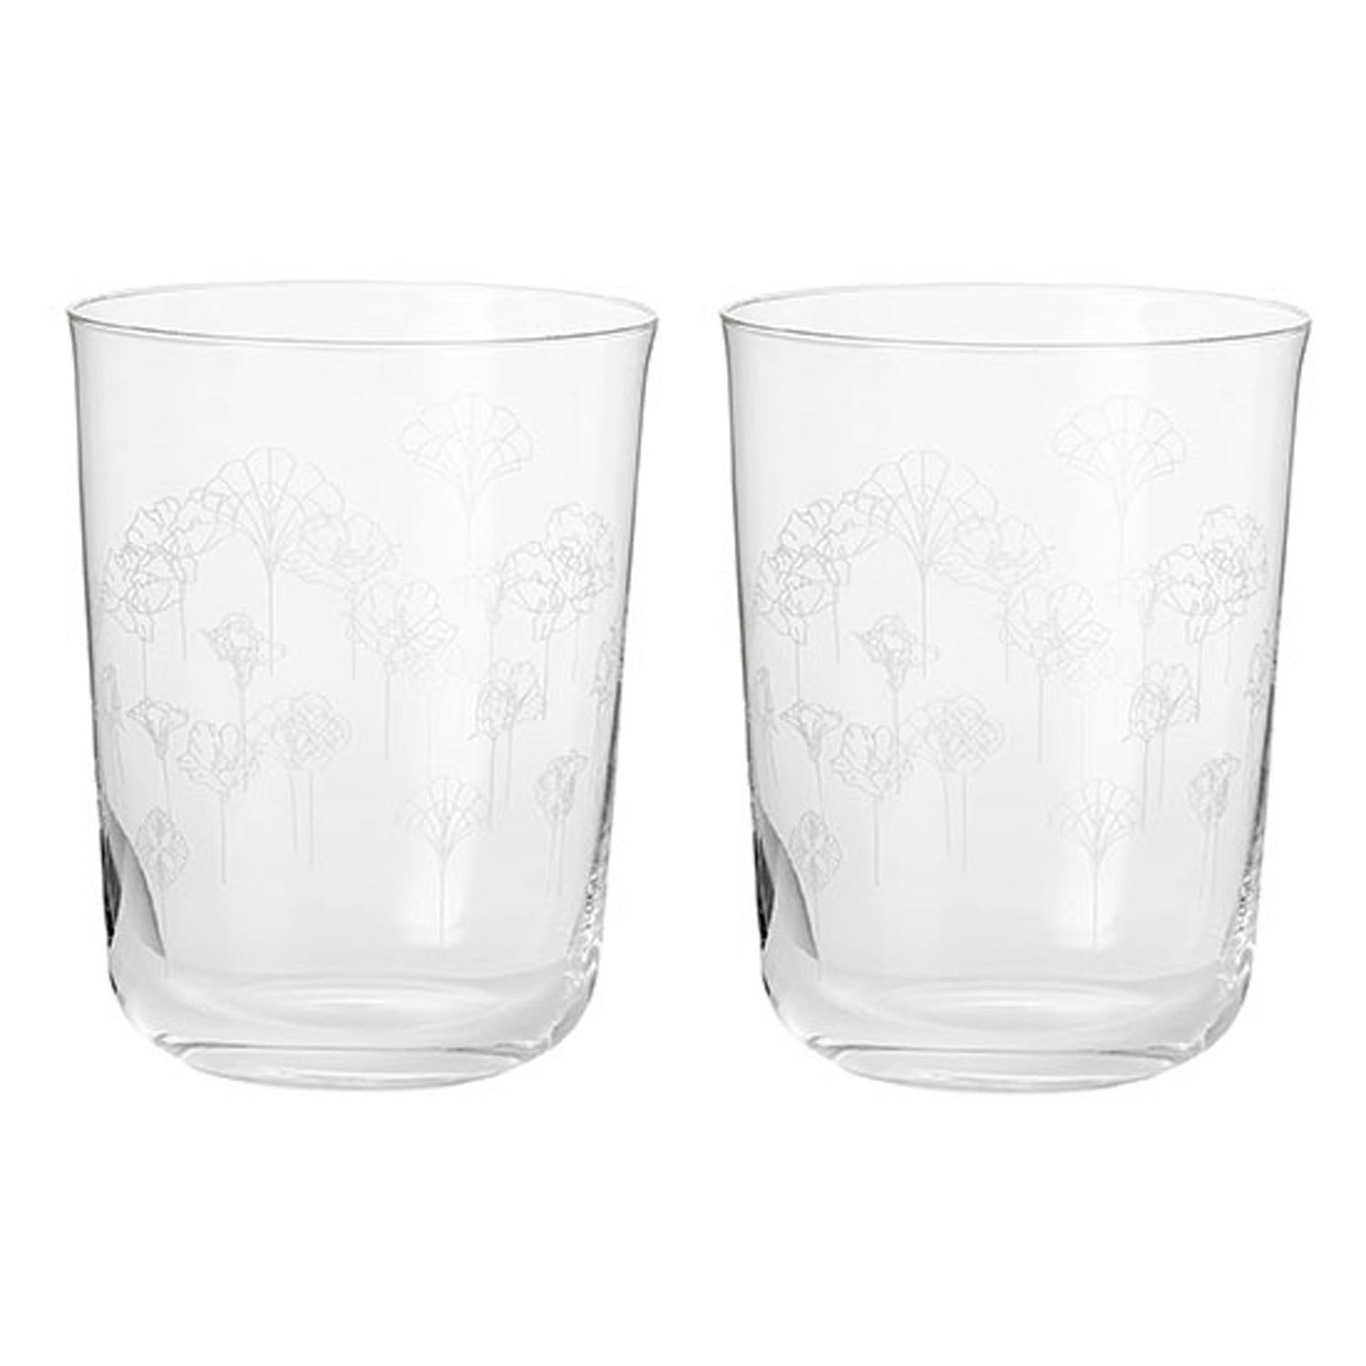 https://royaldesign.com/image/2/frederik-bagger-flower-drinking-glasses-2-pack-0?w=800&quality=80